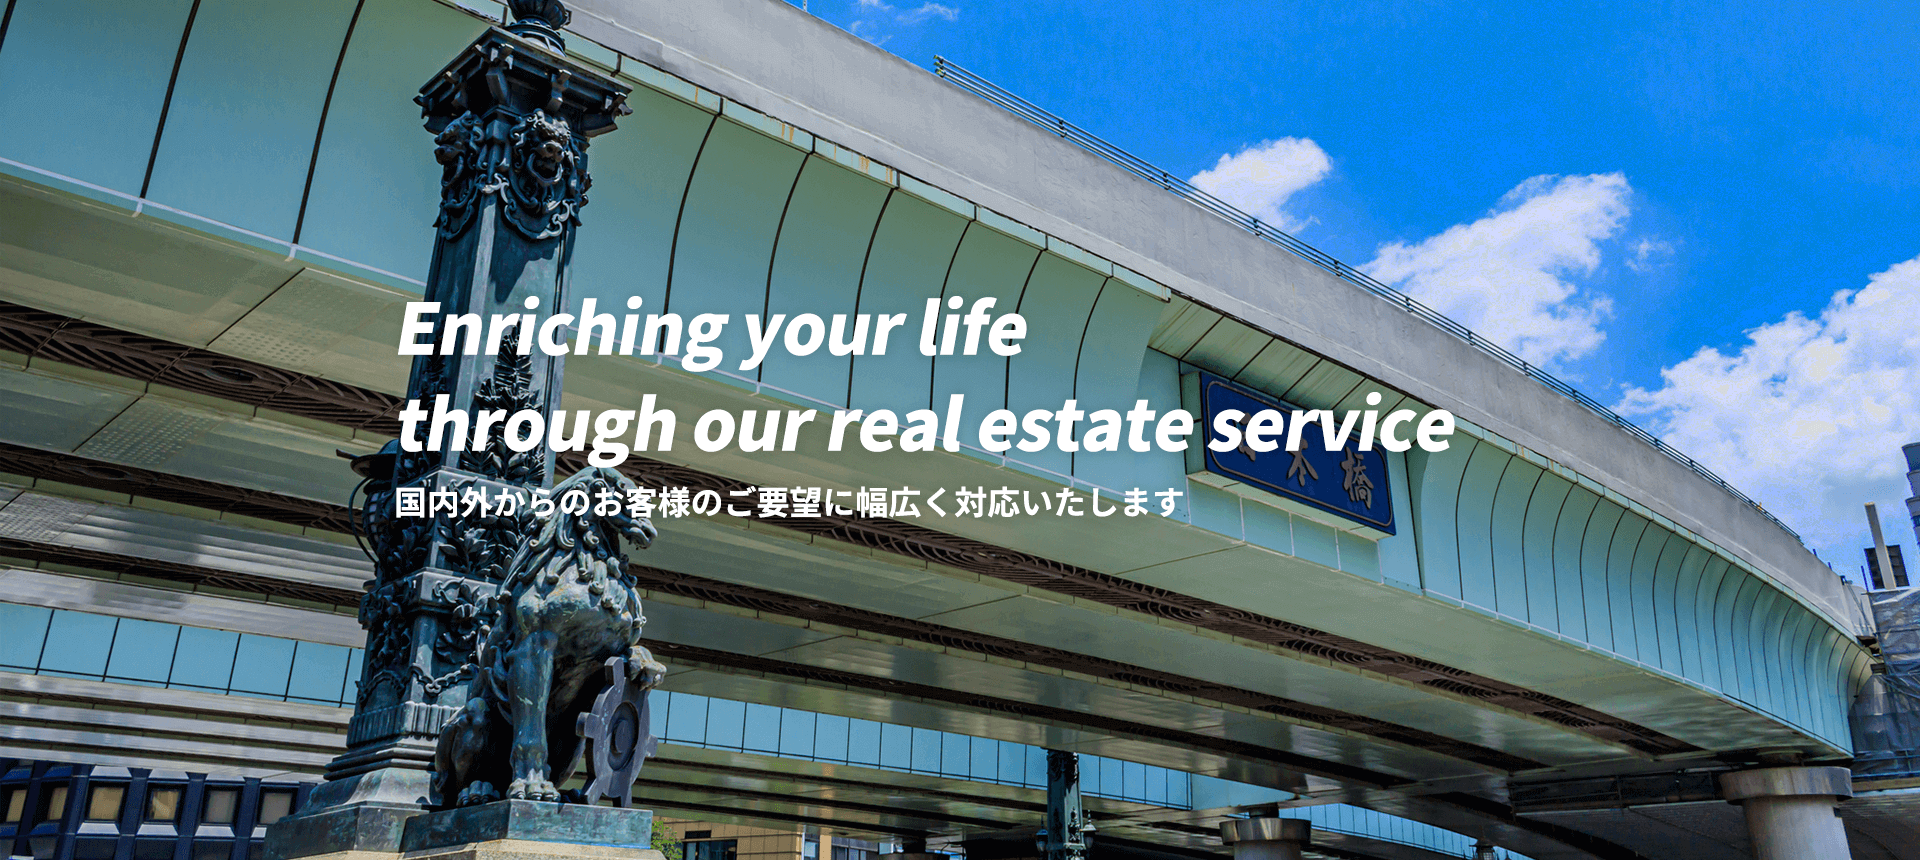 Enriching your life through our real estate service
国内外からのお客様のご要望に幅広く対応いたします